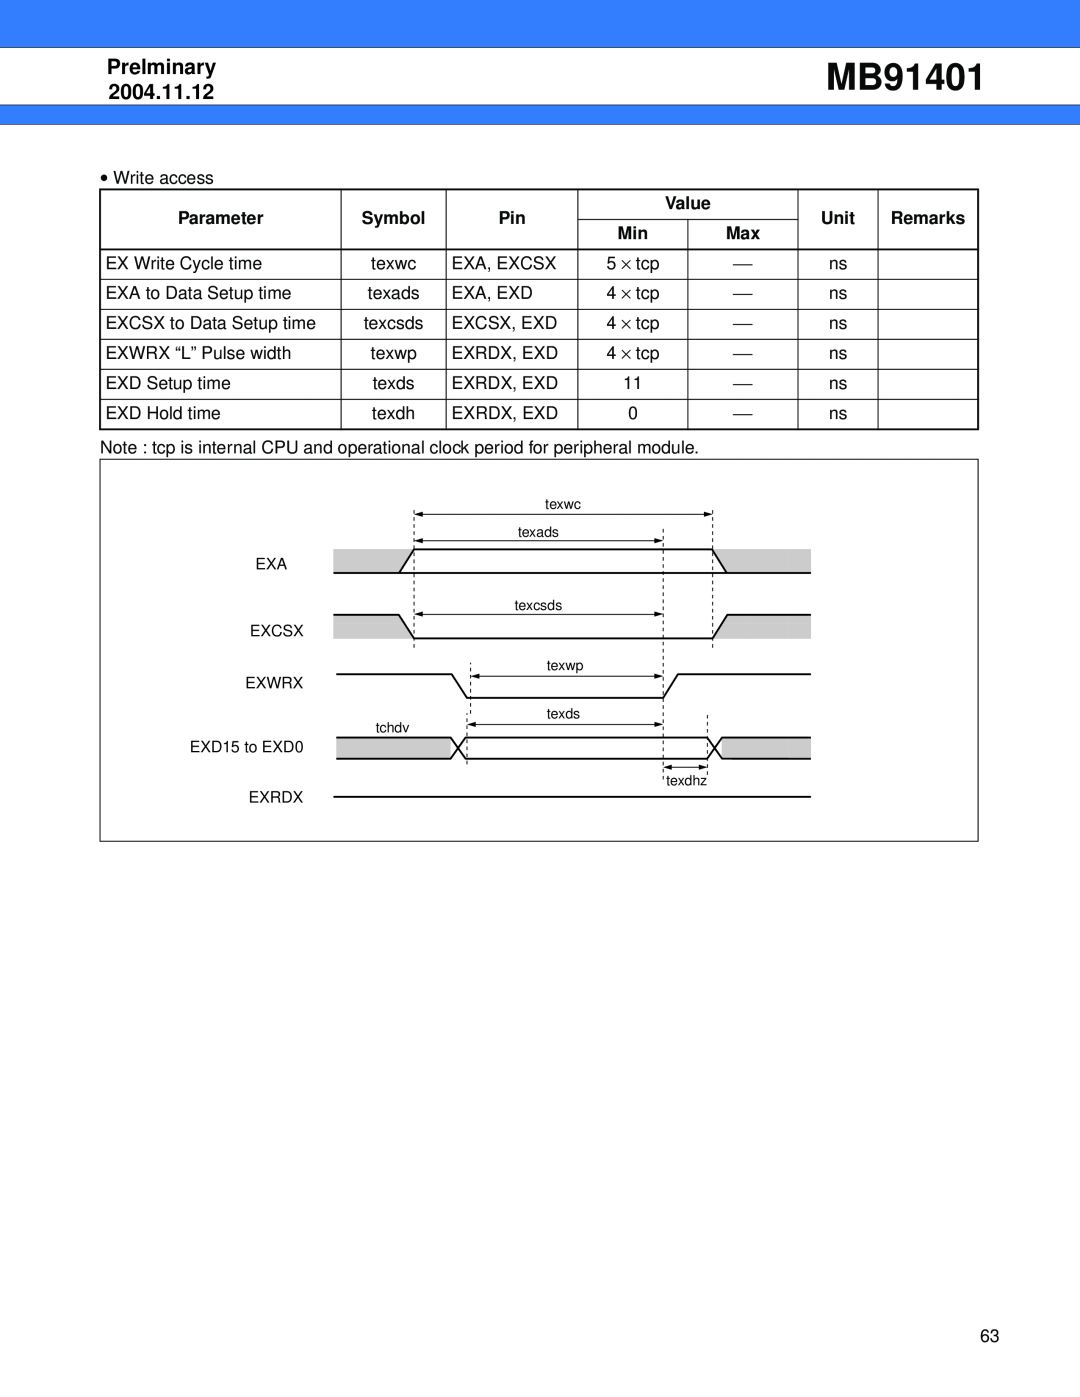 Fujitsu MB91401 manual Prelminary, 2004.11.12, Parameter, Symbol, Value, Unit, Remarks 